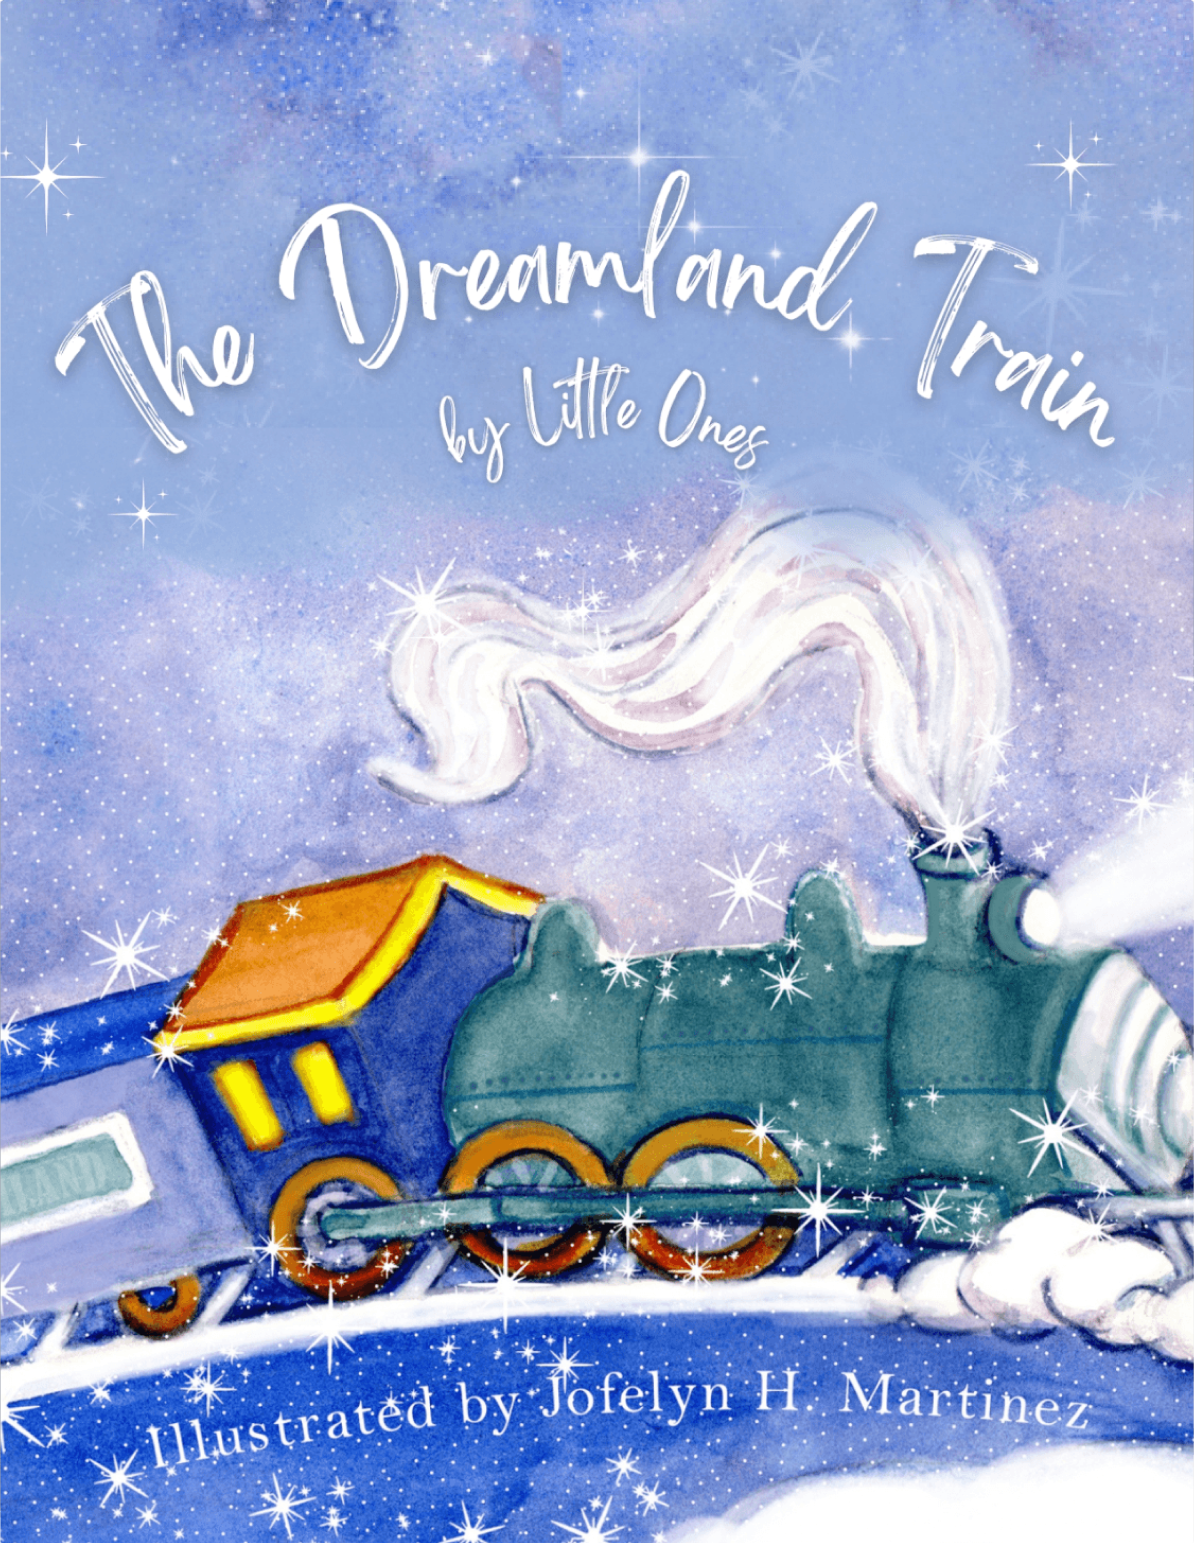 The Dreamland Train